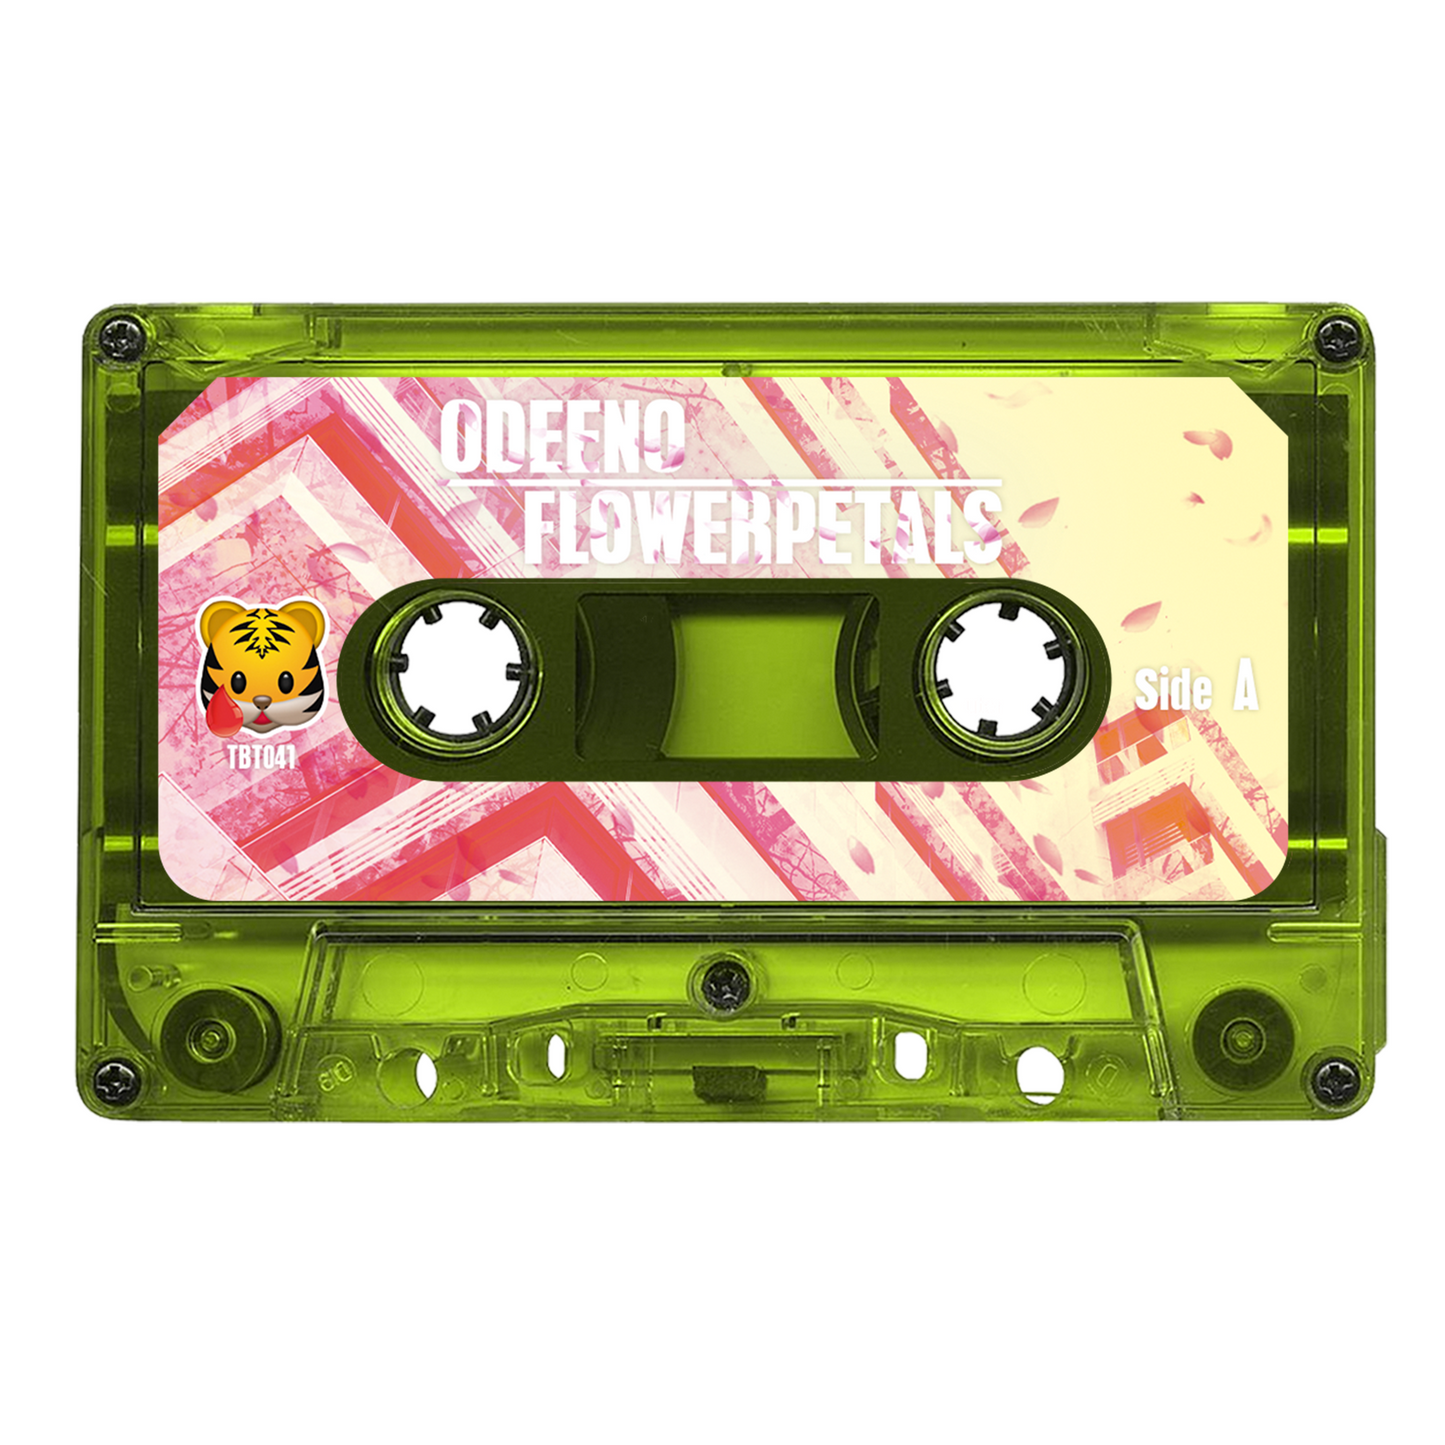 Odeeno - "Flowerpetals" Limited Edition Valentine's Day Cassette Tape